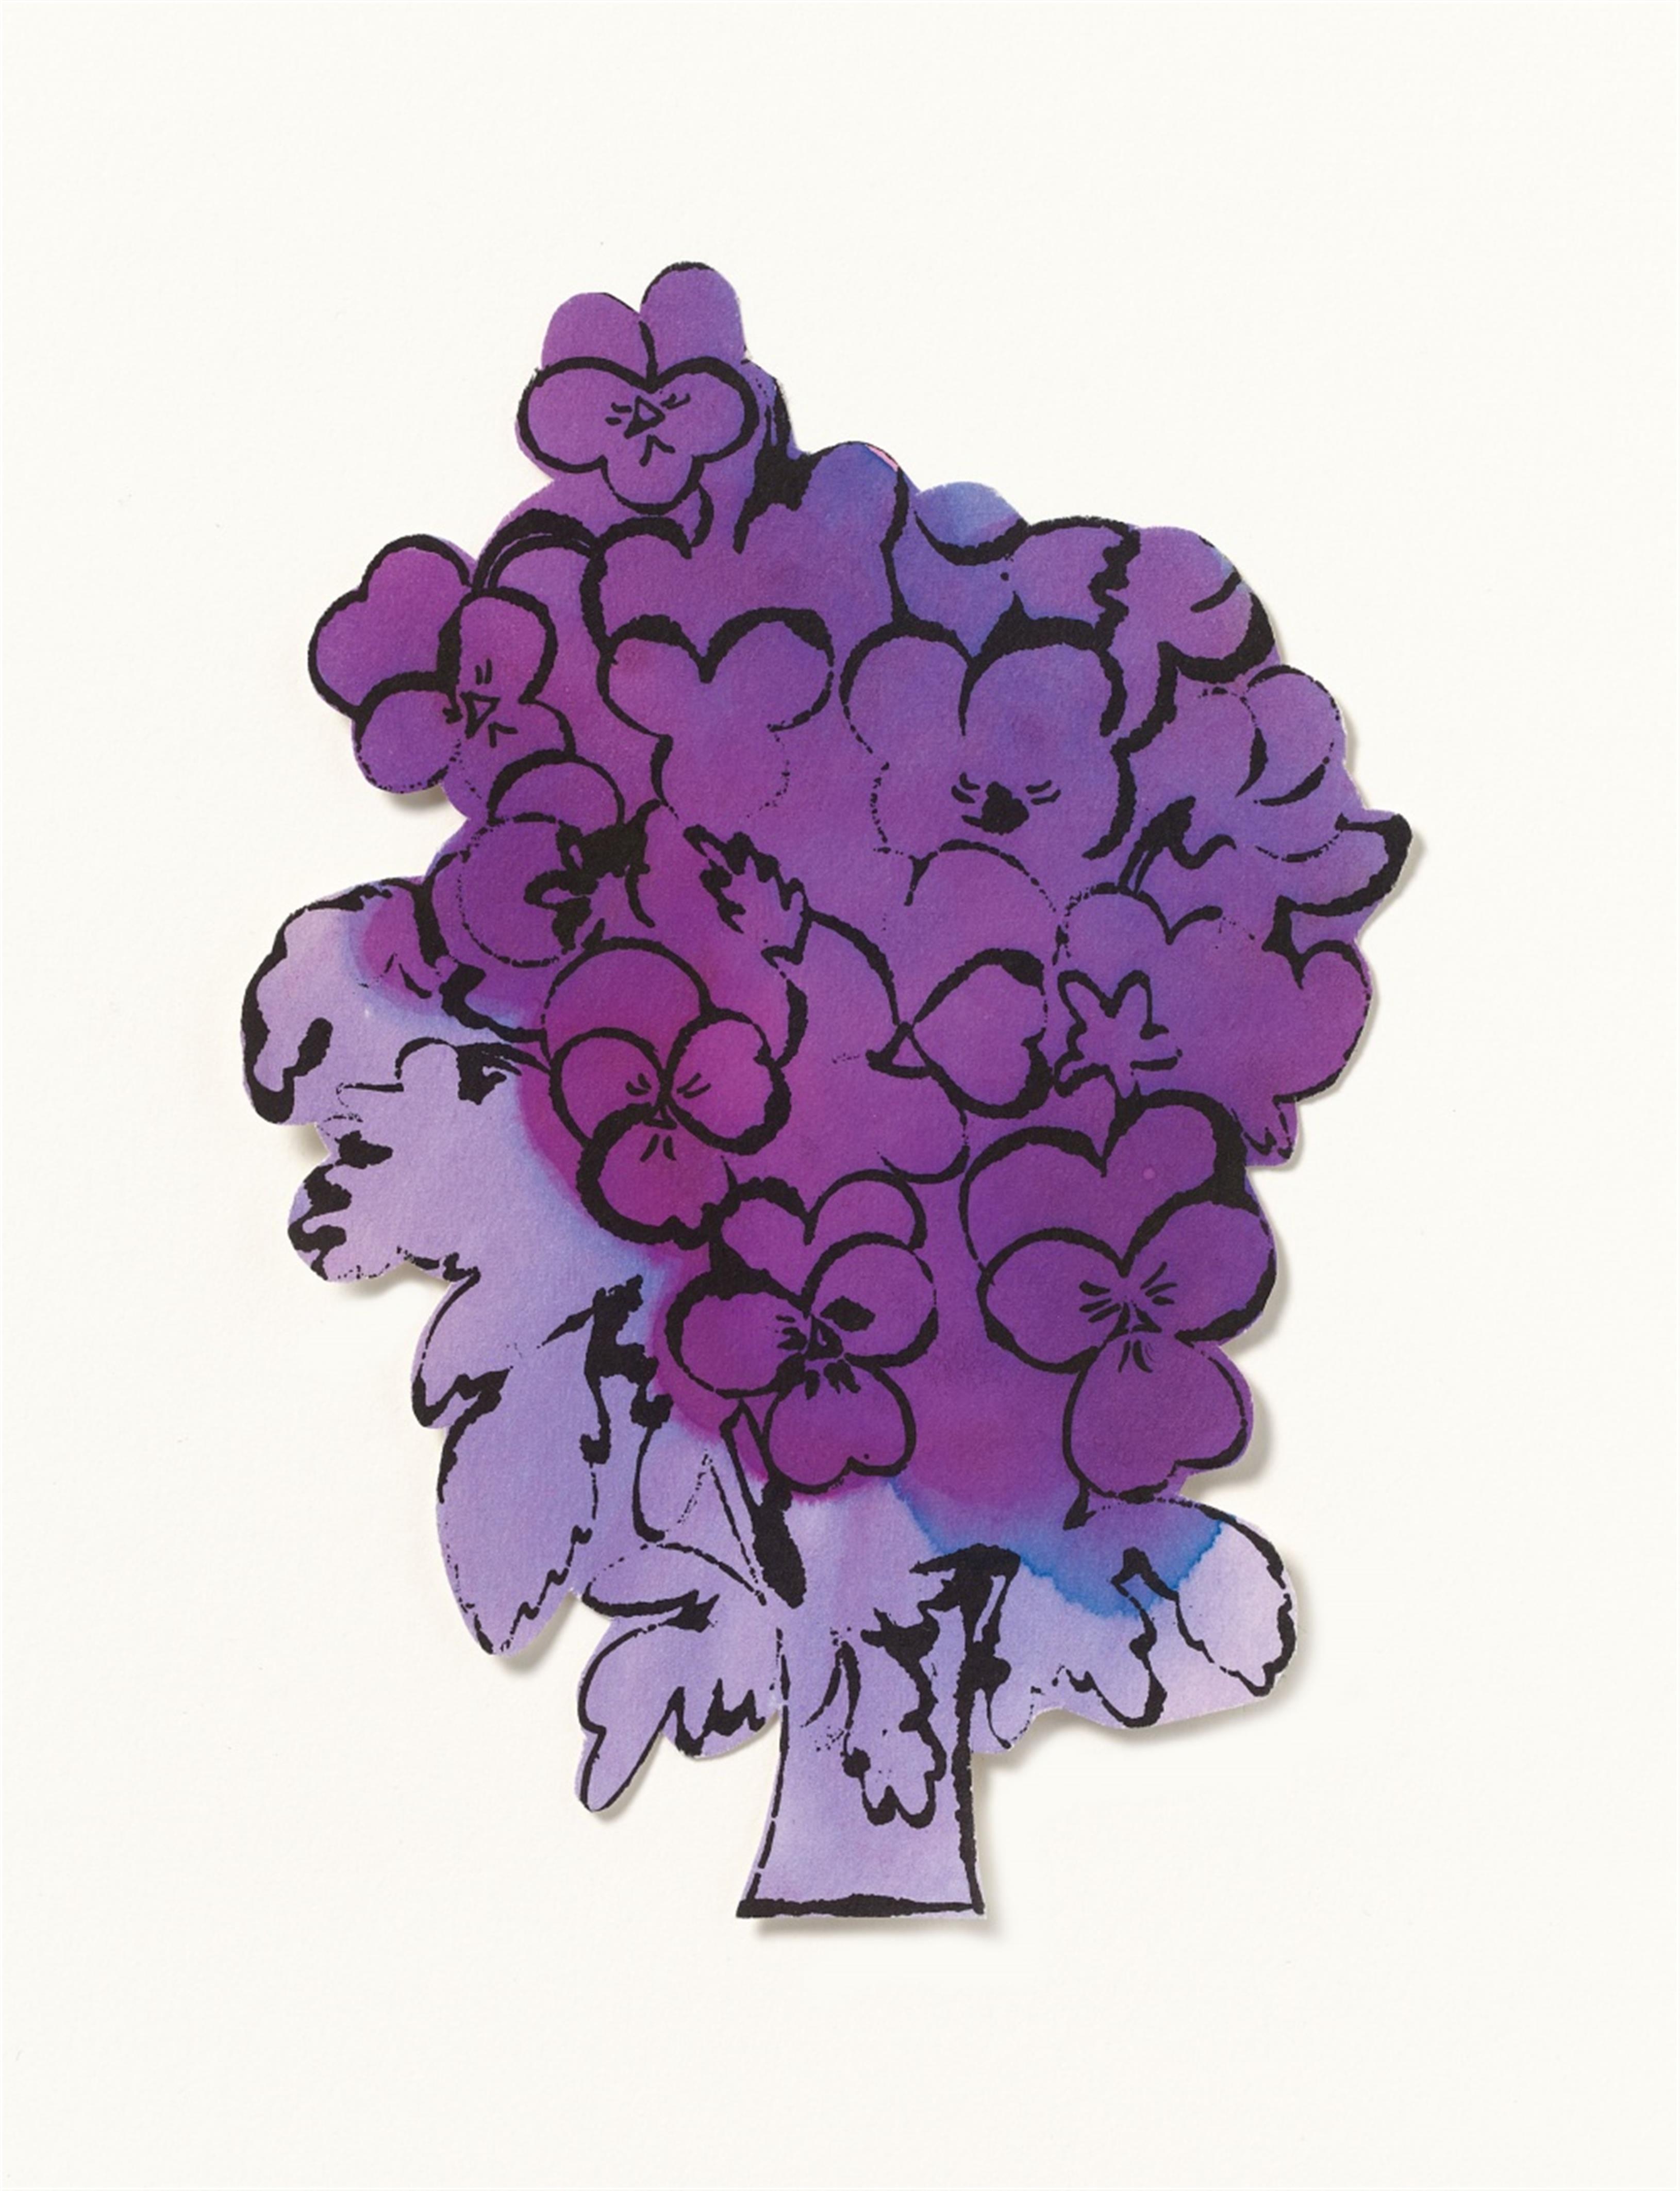 Andy Warhol - Flowers - image-1